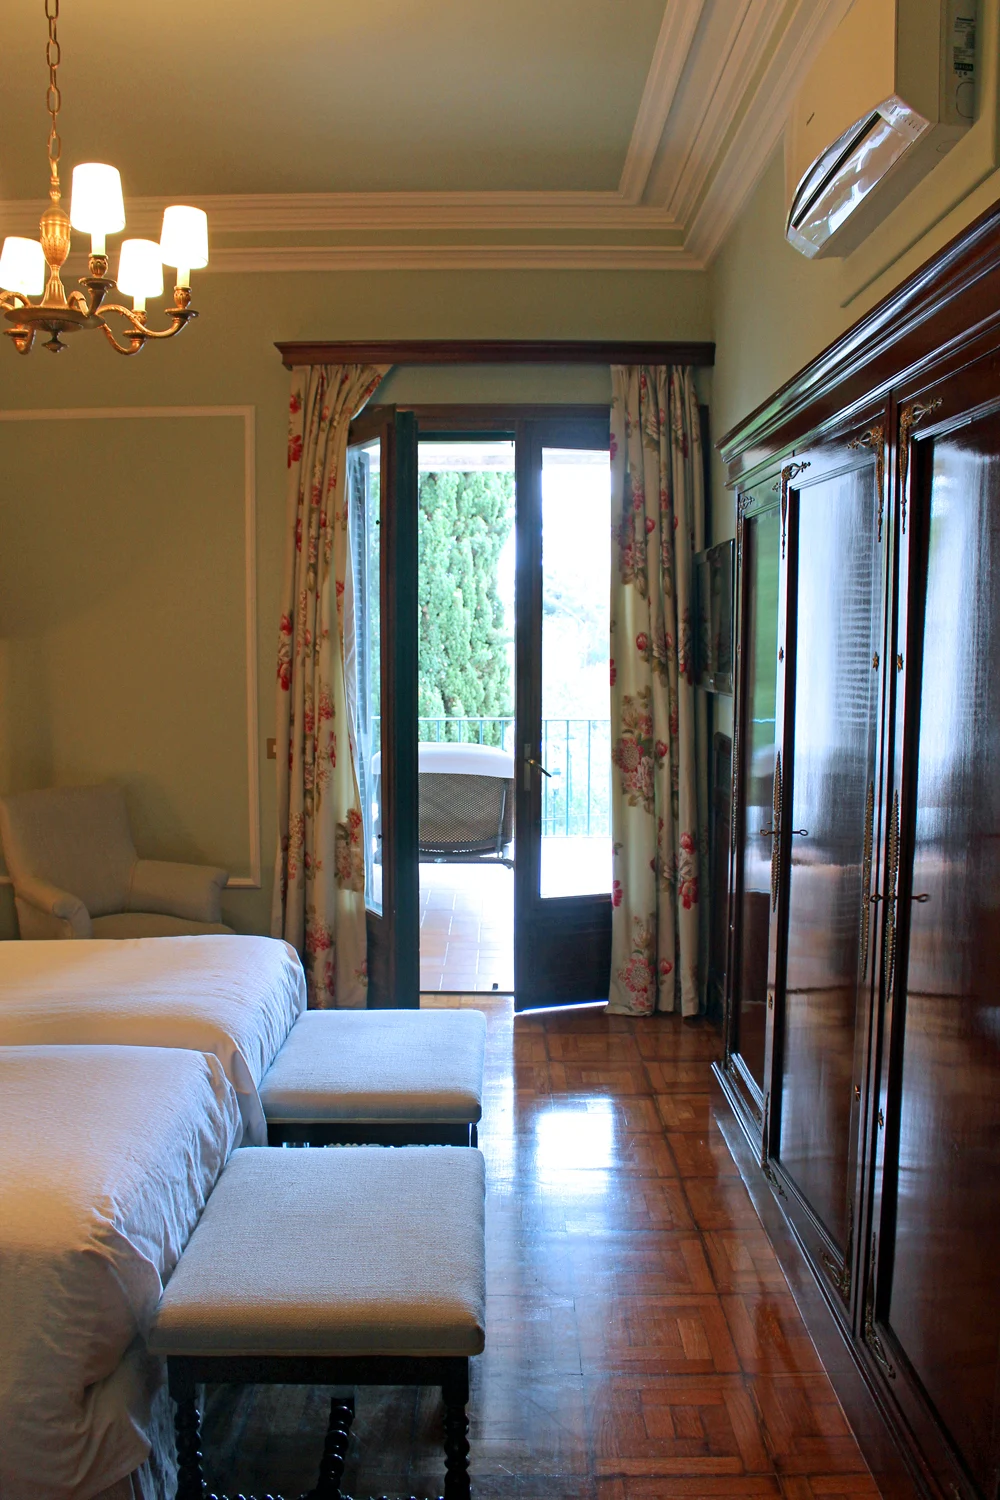 Hostal de la Gavina bedroom, Costa Brava, Spain - luxury travel blog